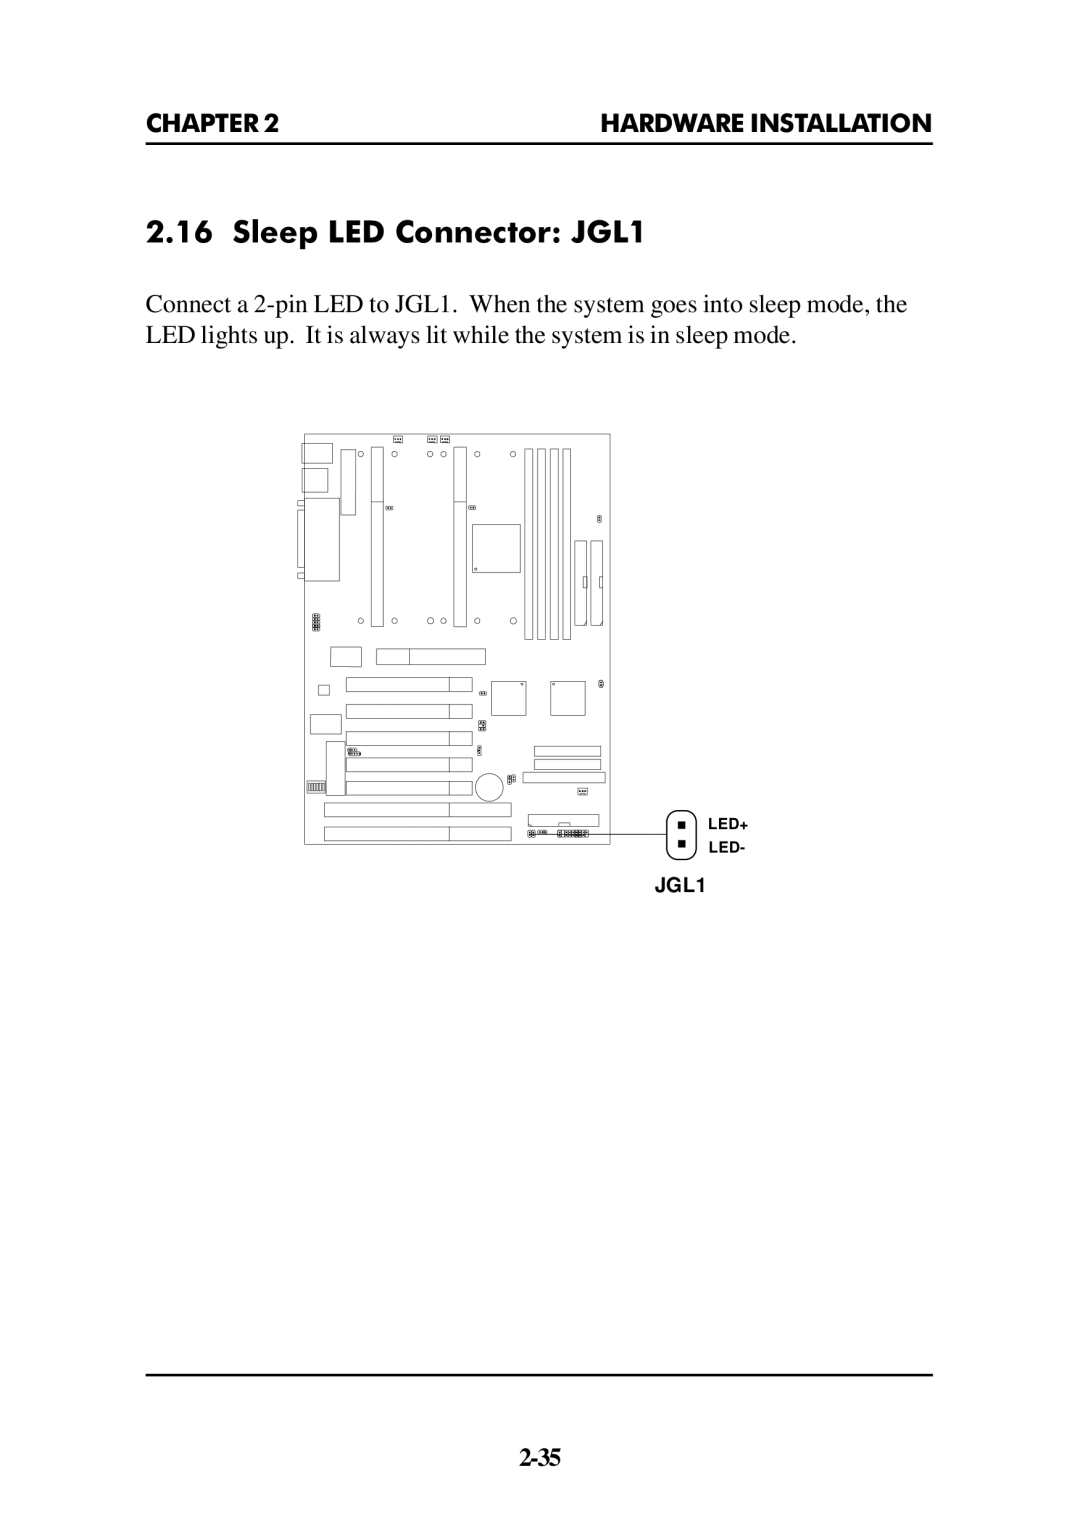 Intel ATX BX2 manual Sleep LED Connector JGL1 